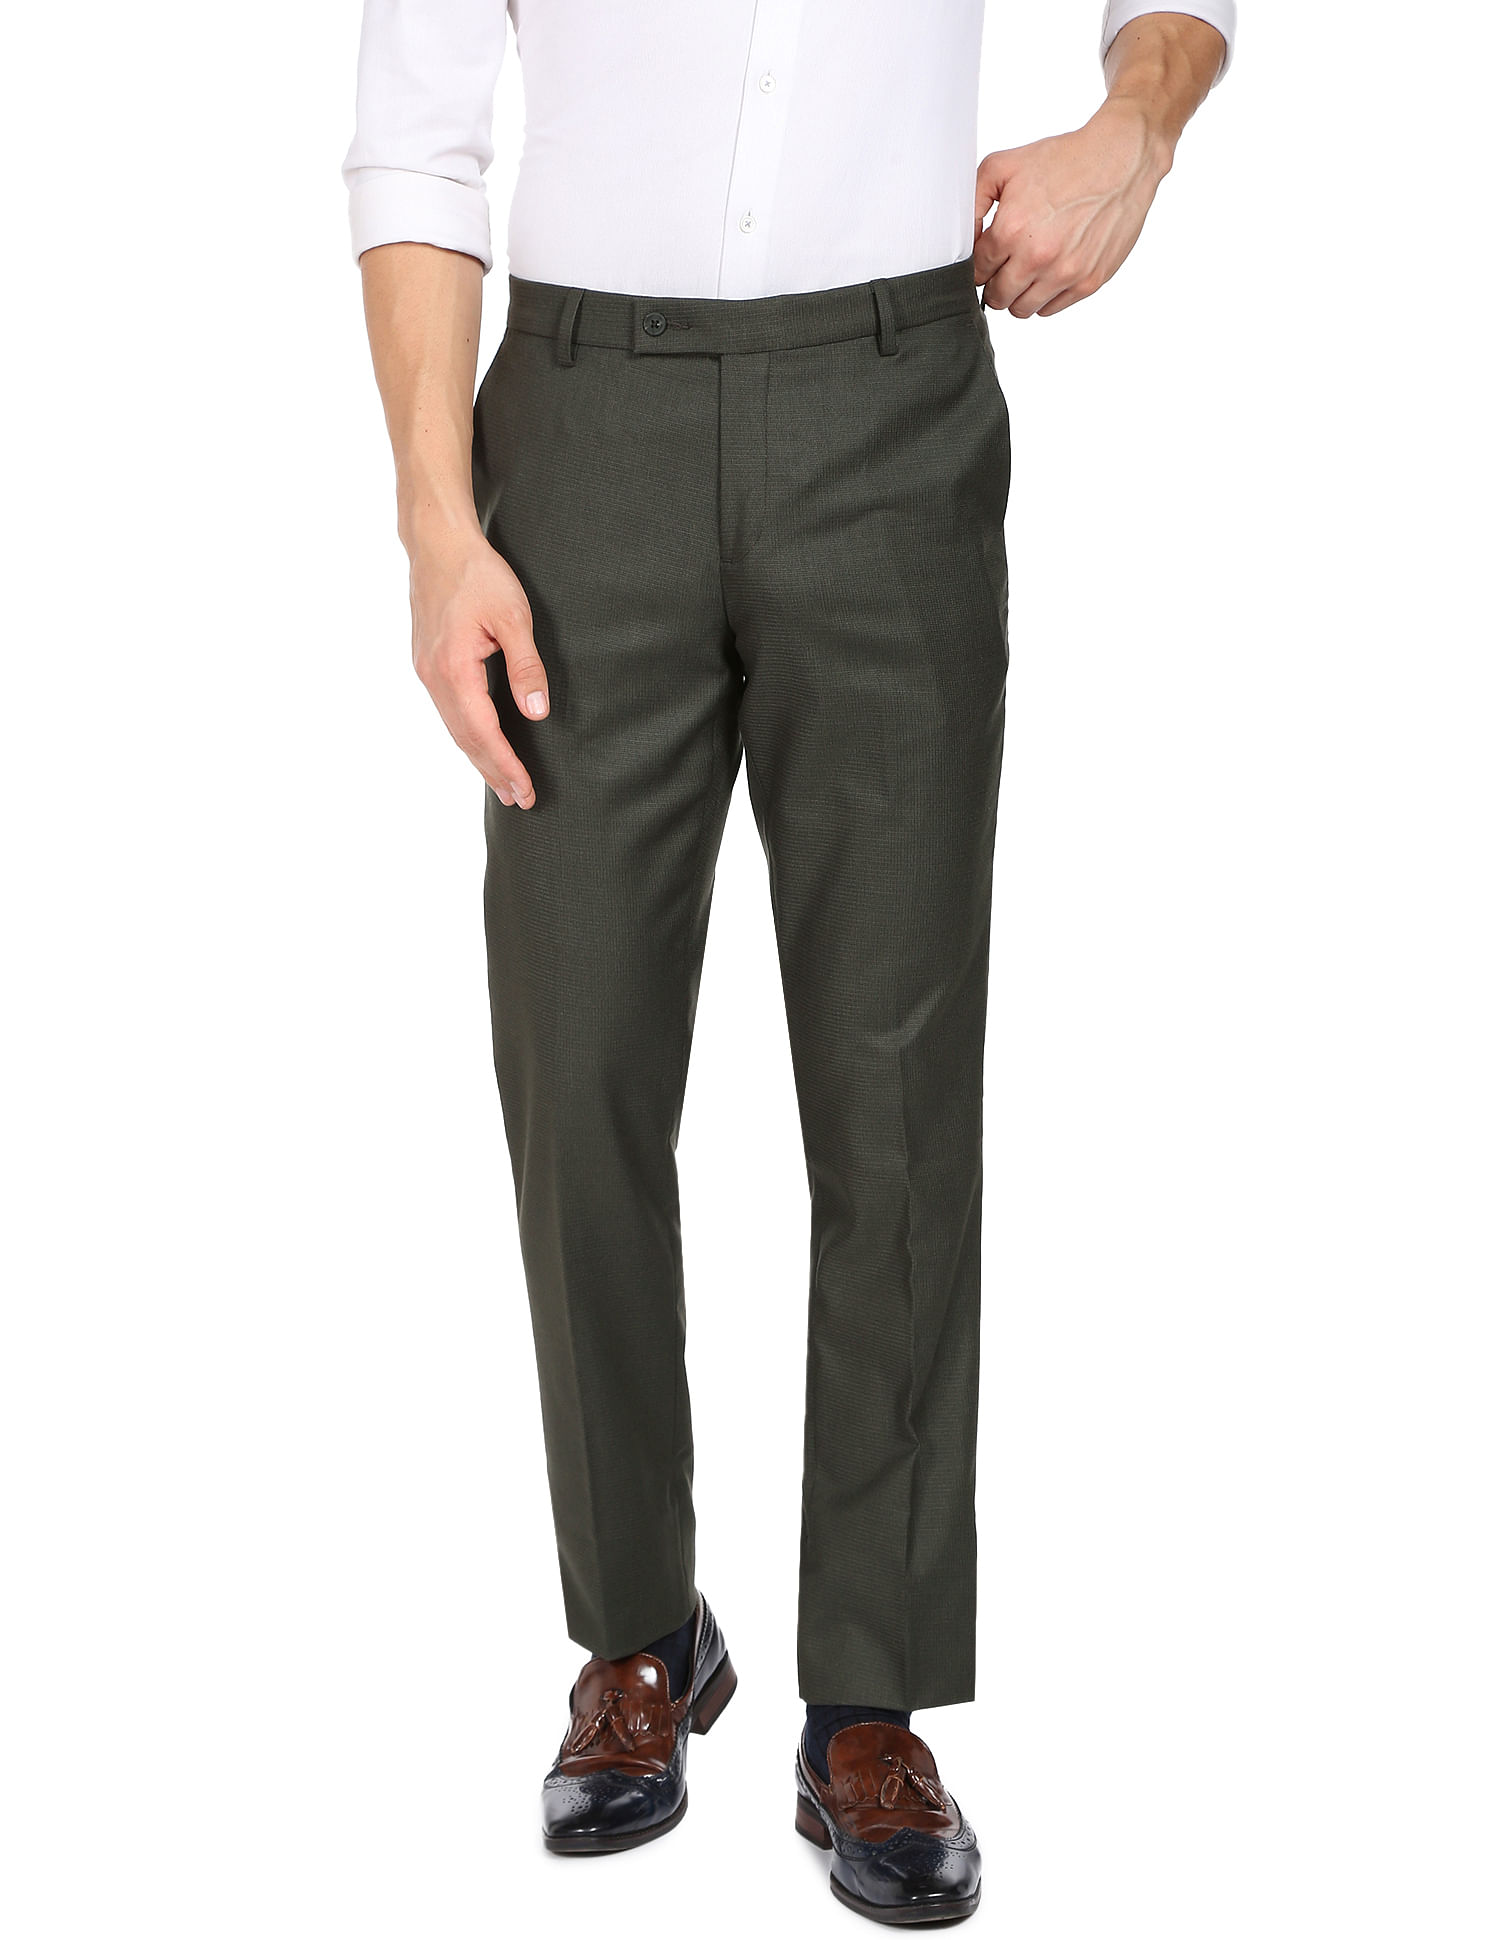 Buy Men's Solid Full Length Formal Trousers Online | Centrepoint Oman